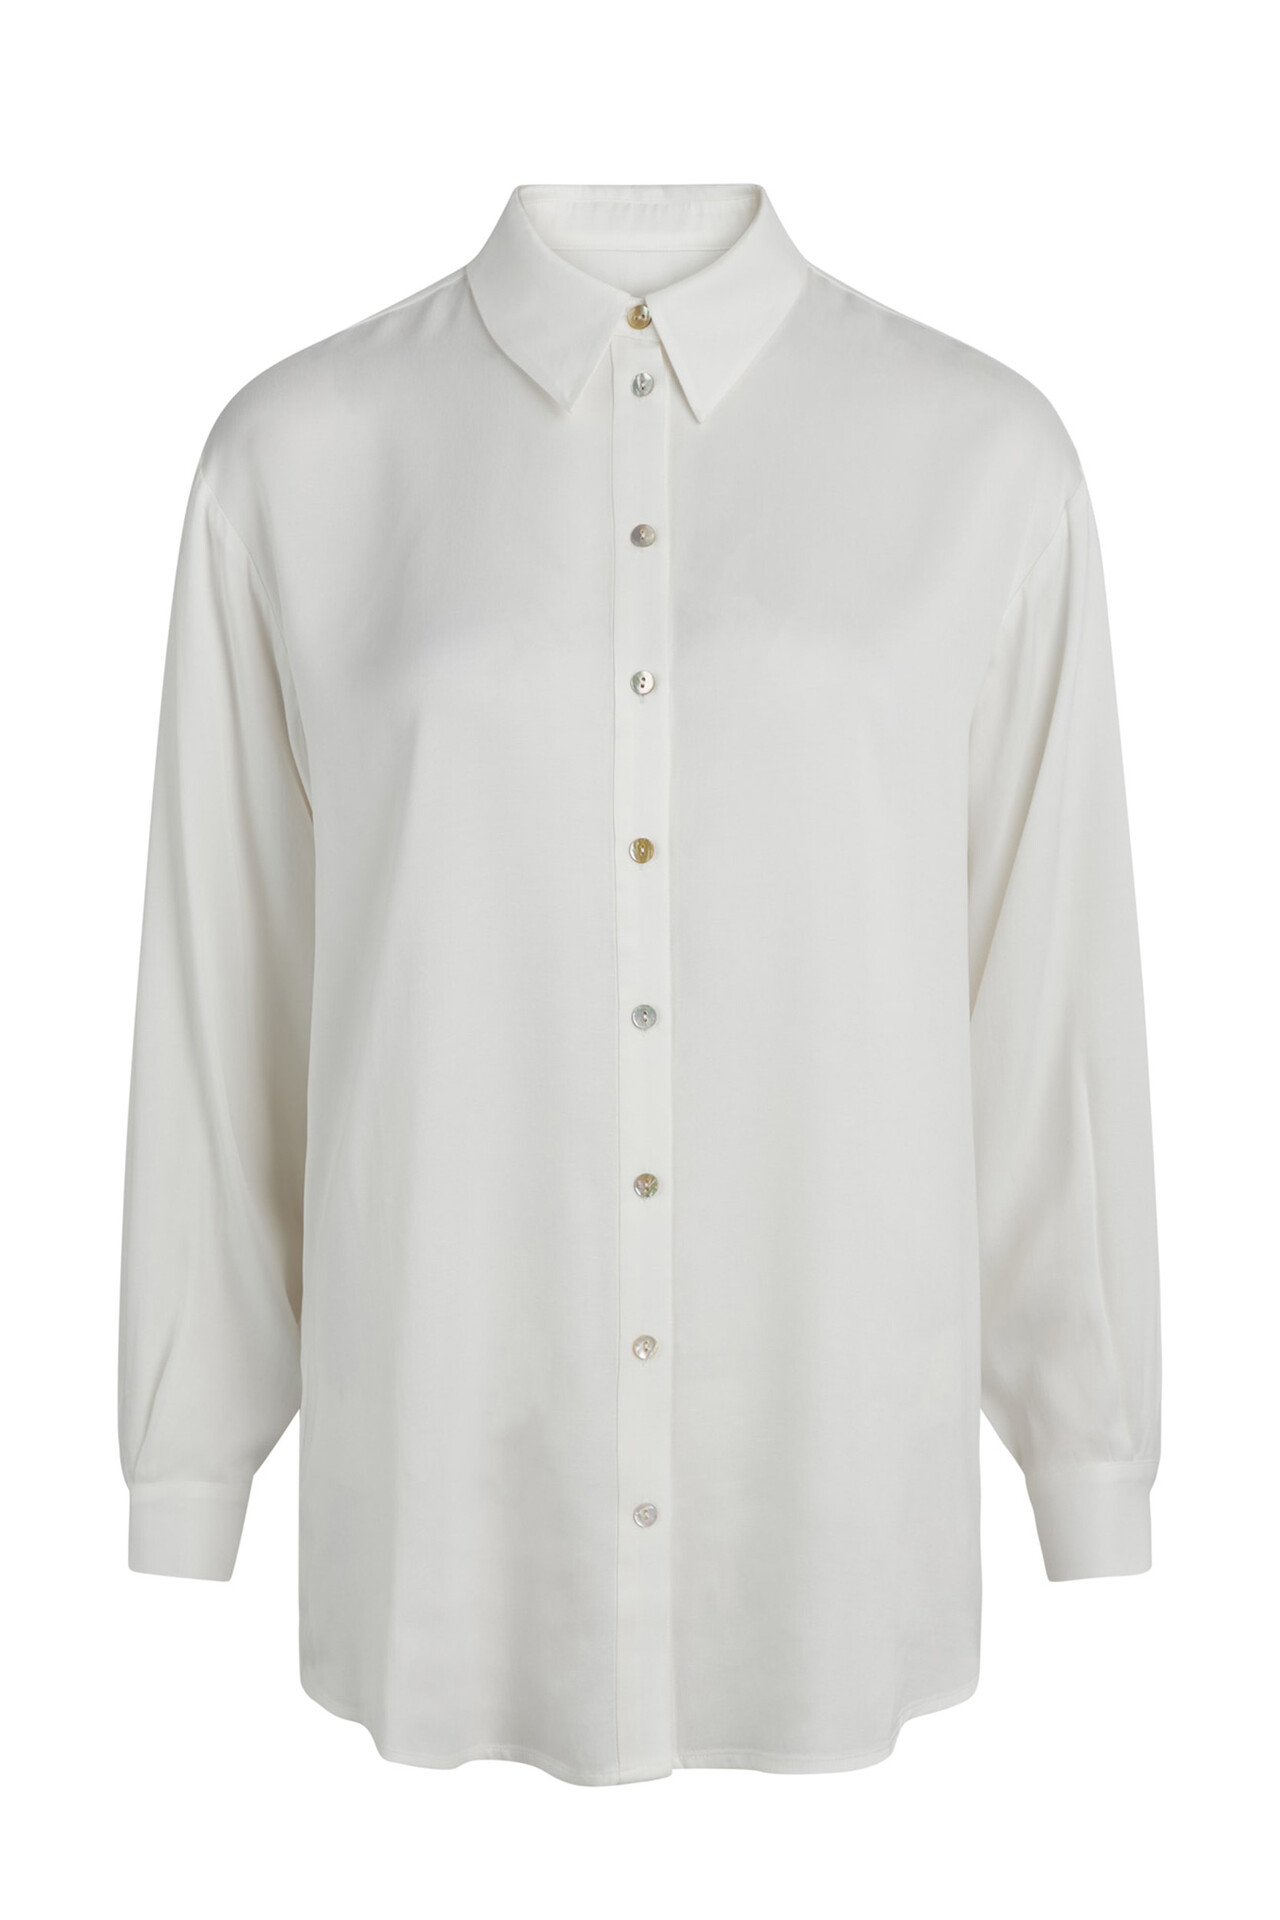 CRÉTON CREmmie skjorte (HVID M)